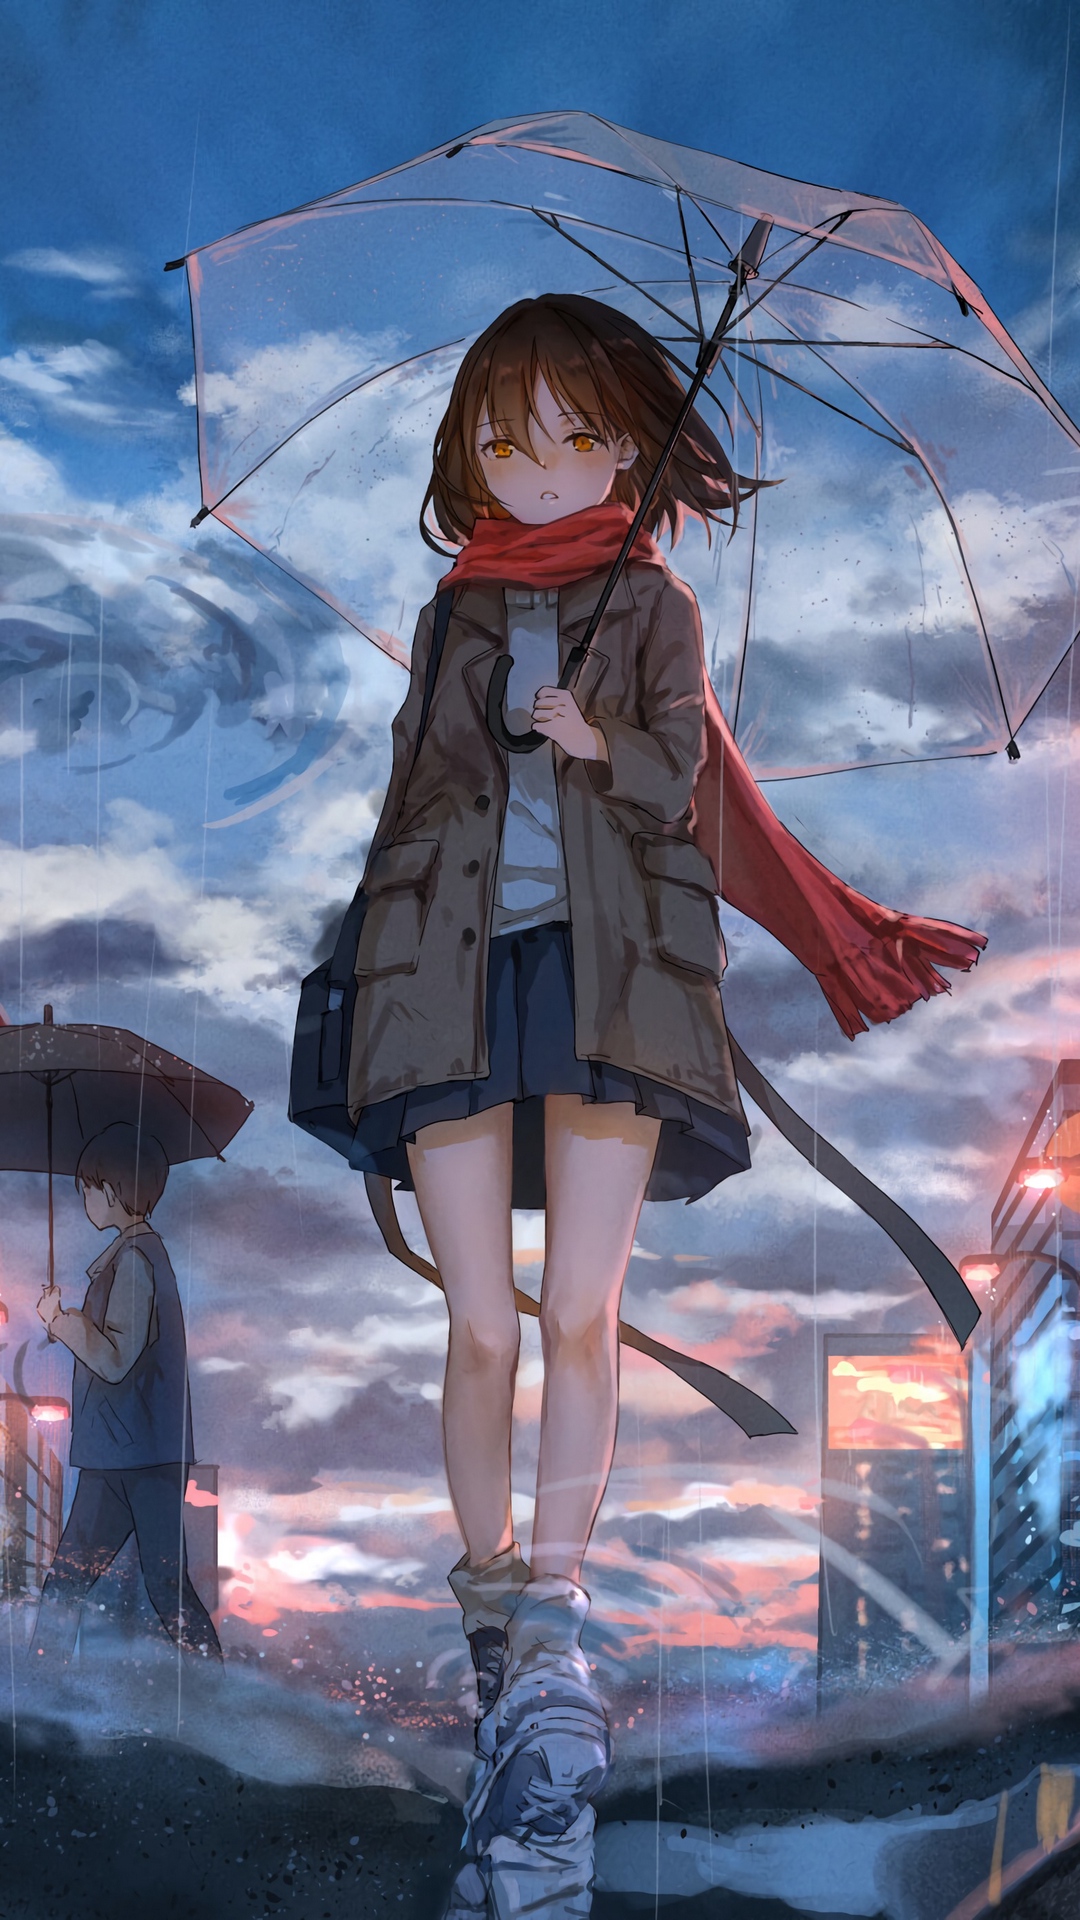 Anime Girl With Umbrella In Rain Wallpaper gambar ke 2